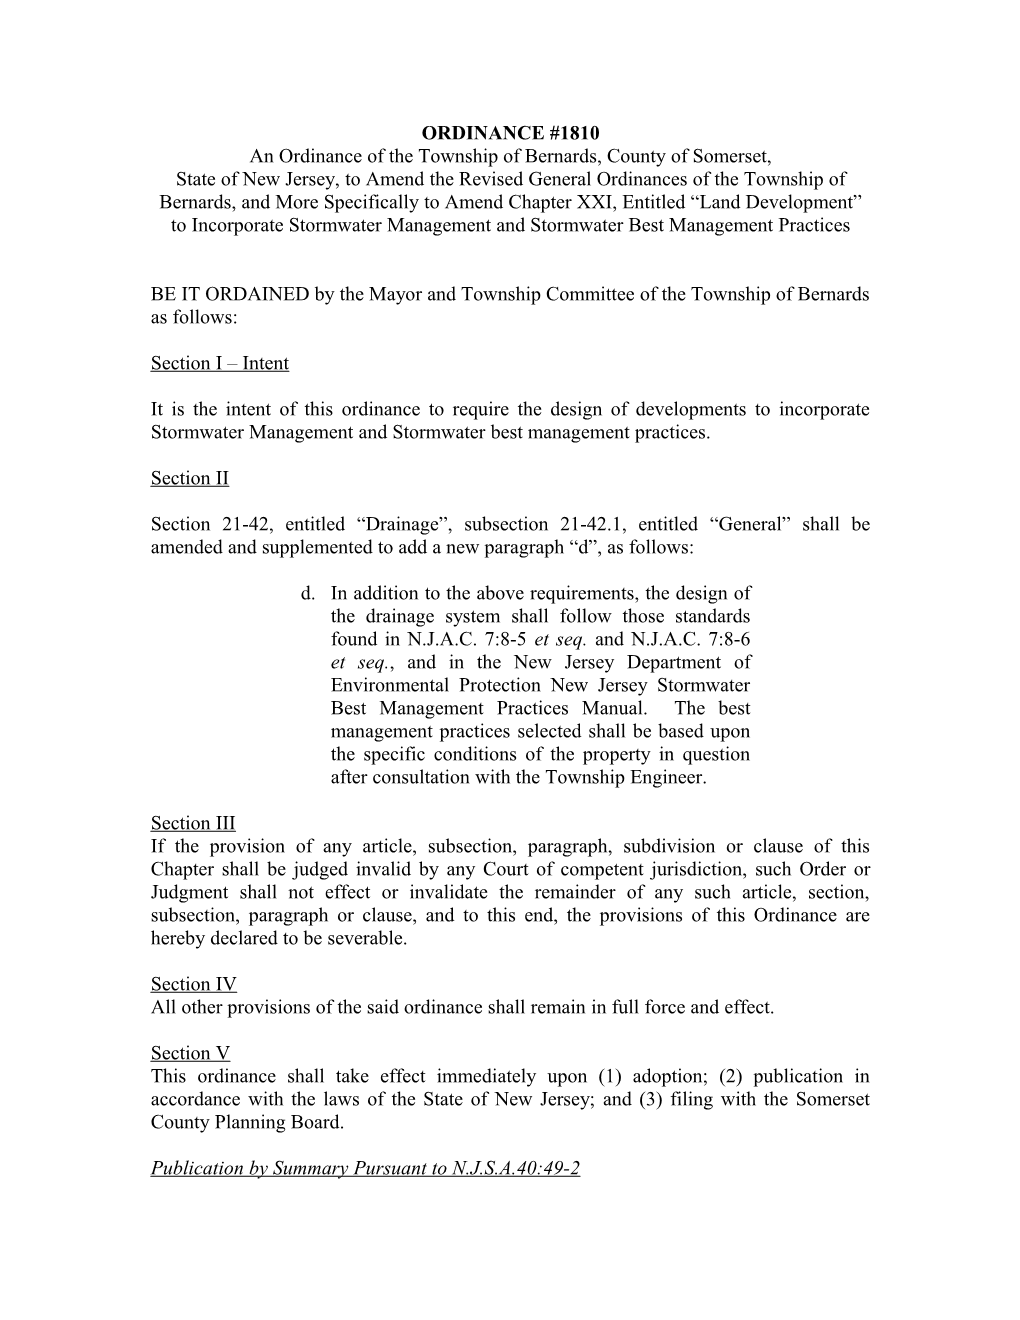 Bernards Ordinance - Re: Njdep Standards for Stormwater (A0370395;1)